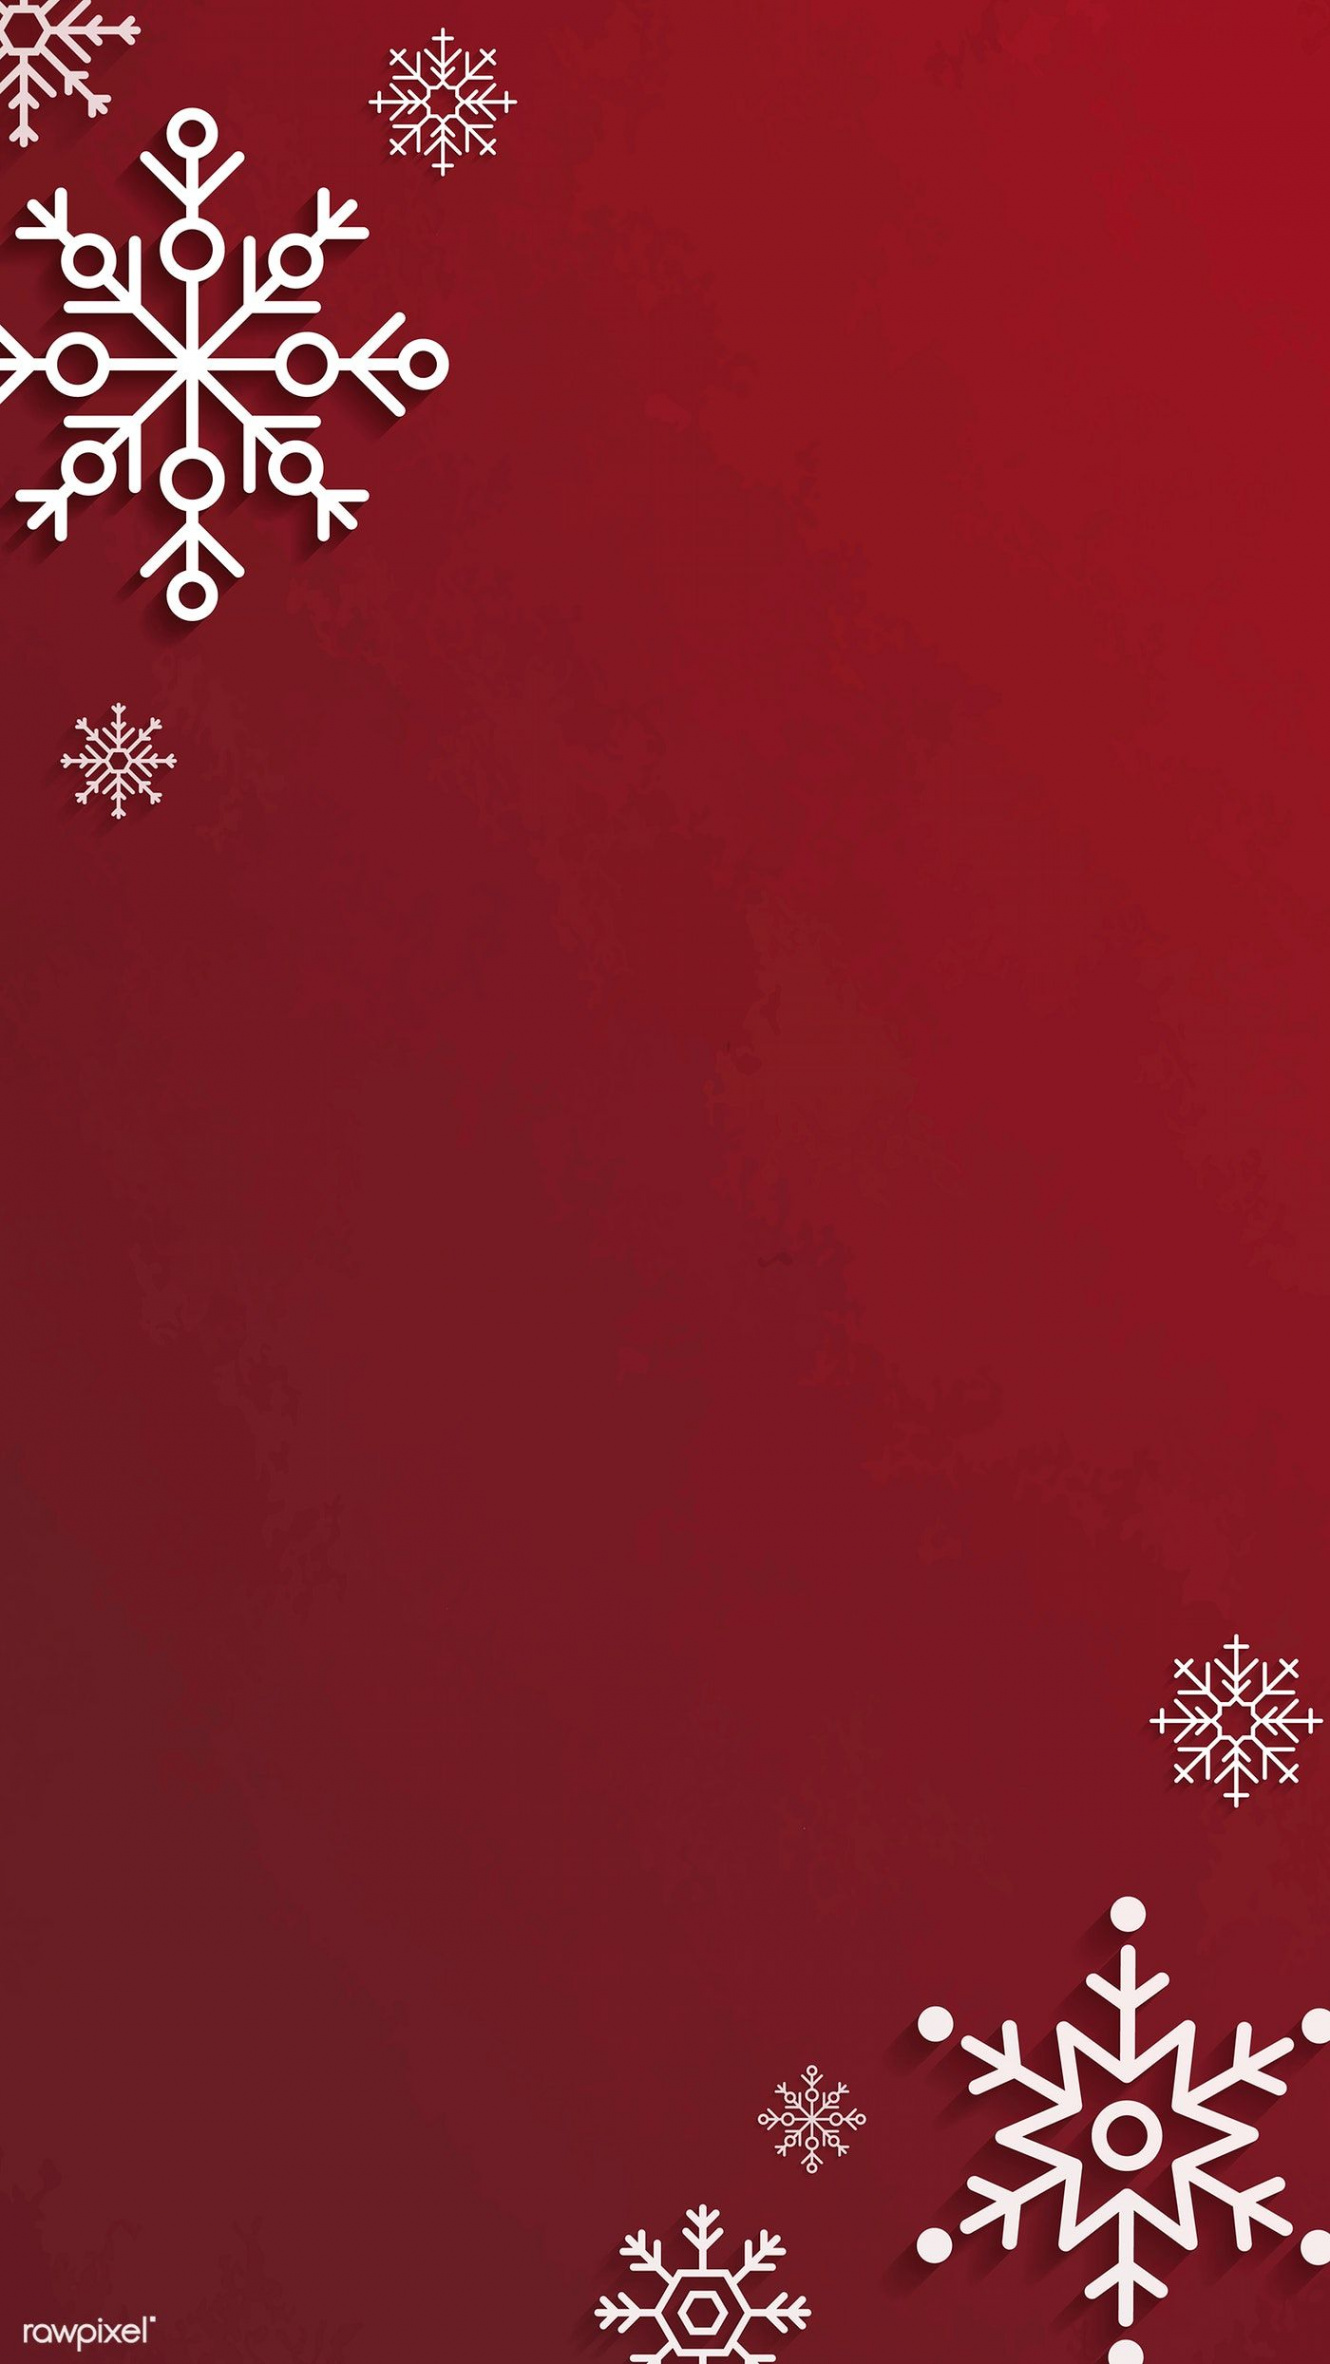 Red Christmas frame mobile phone wallpaper vector  premium image